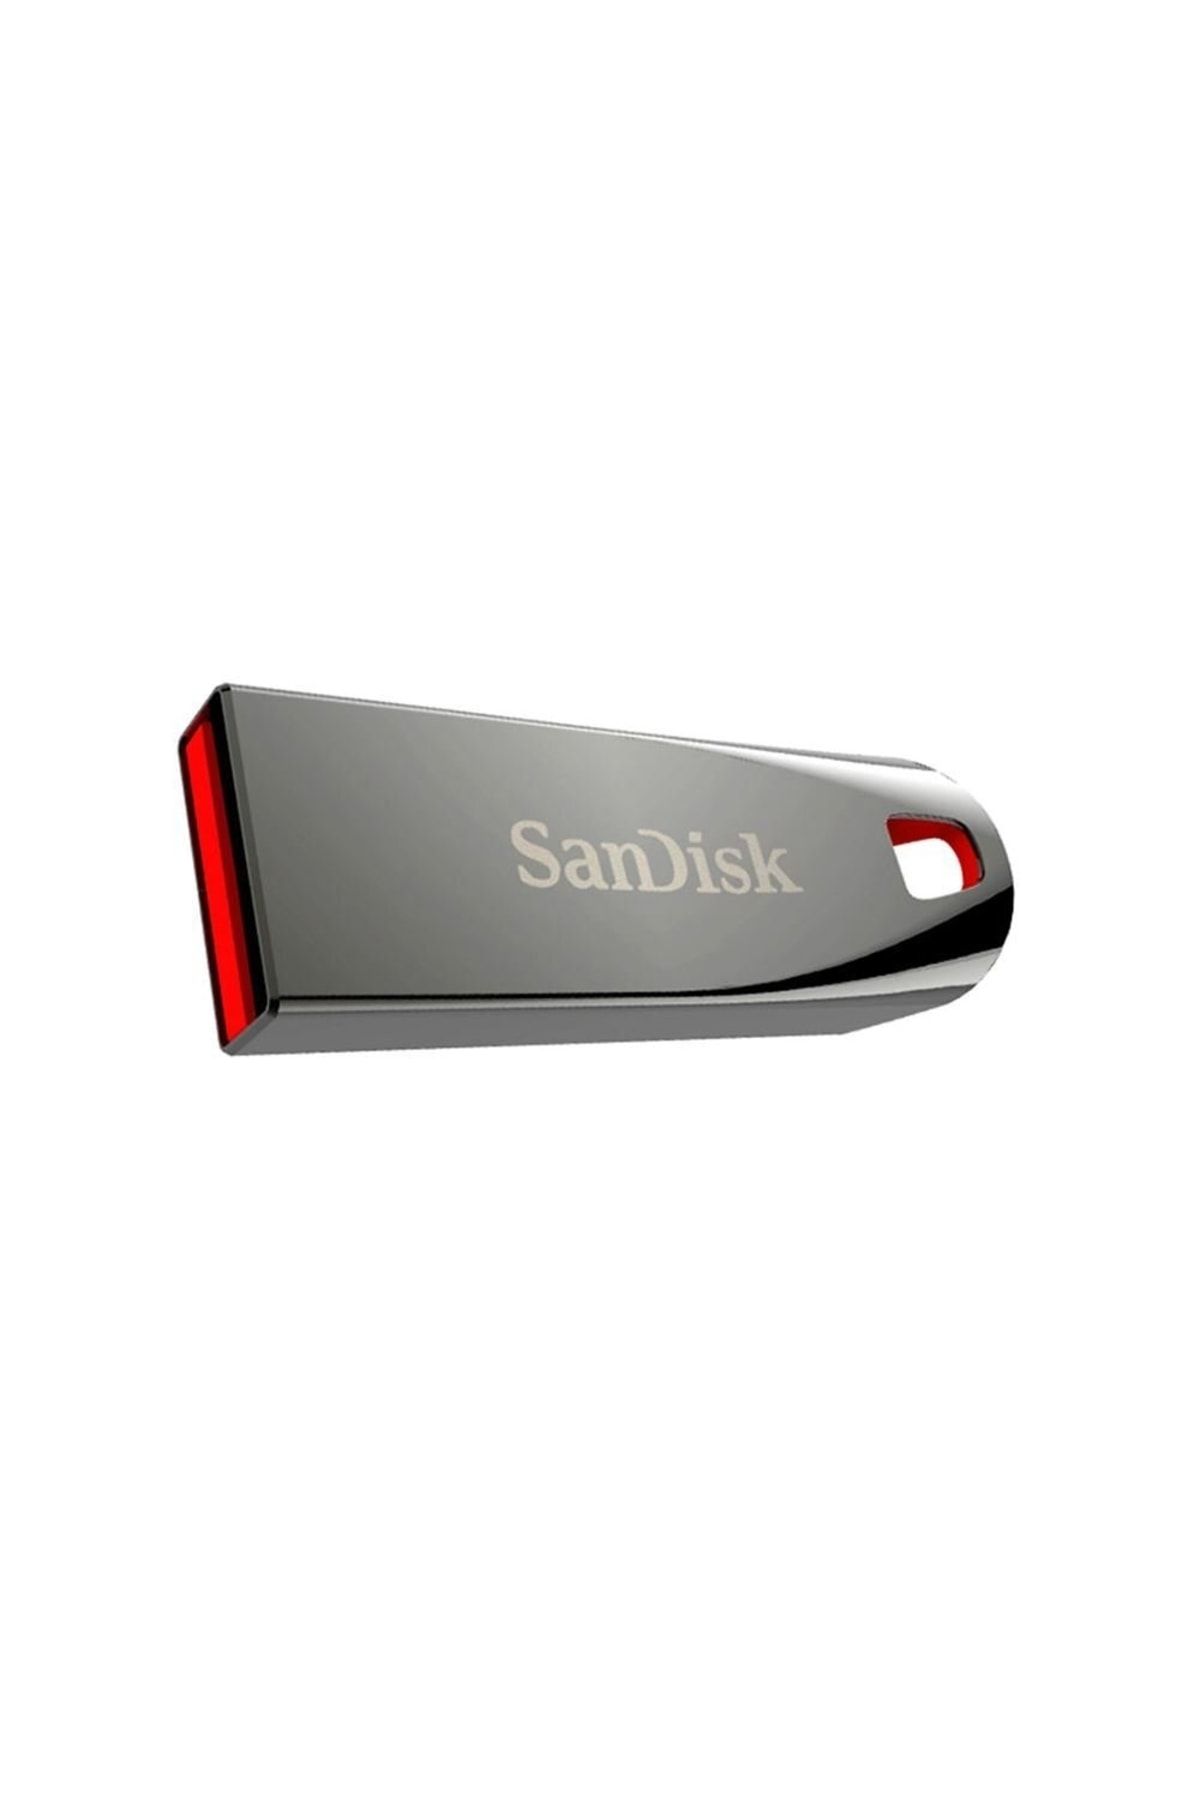 SDCZ71-064G-B35 - Clé USB 2.0 SanDisk Cruzer Force 64 Go 